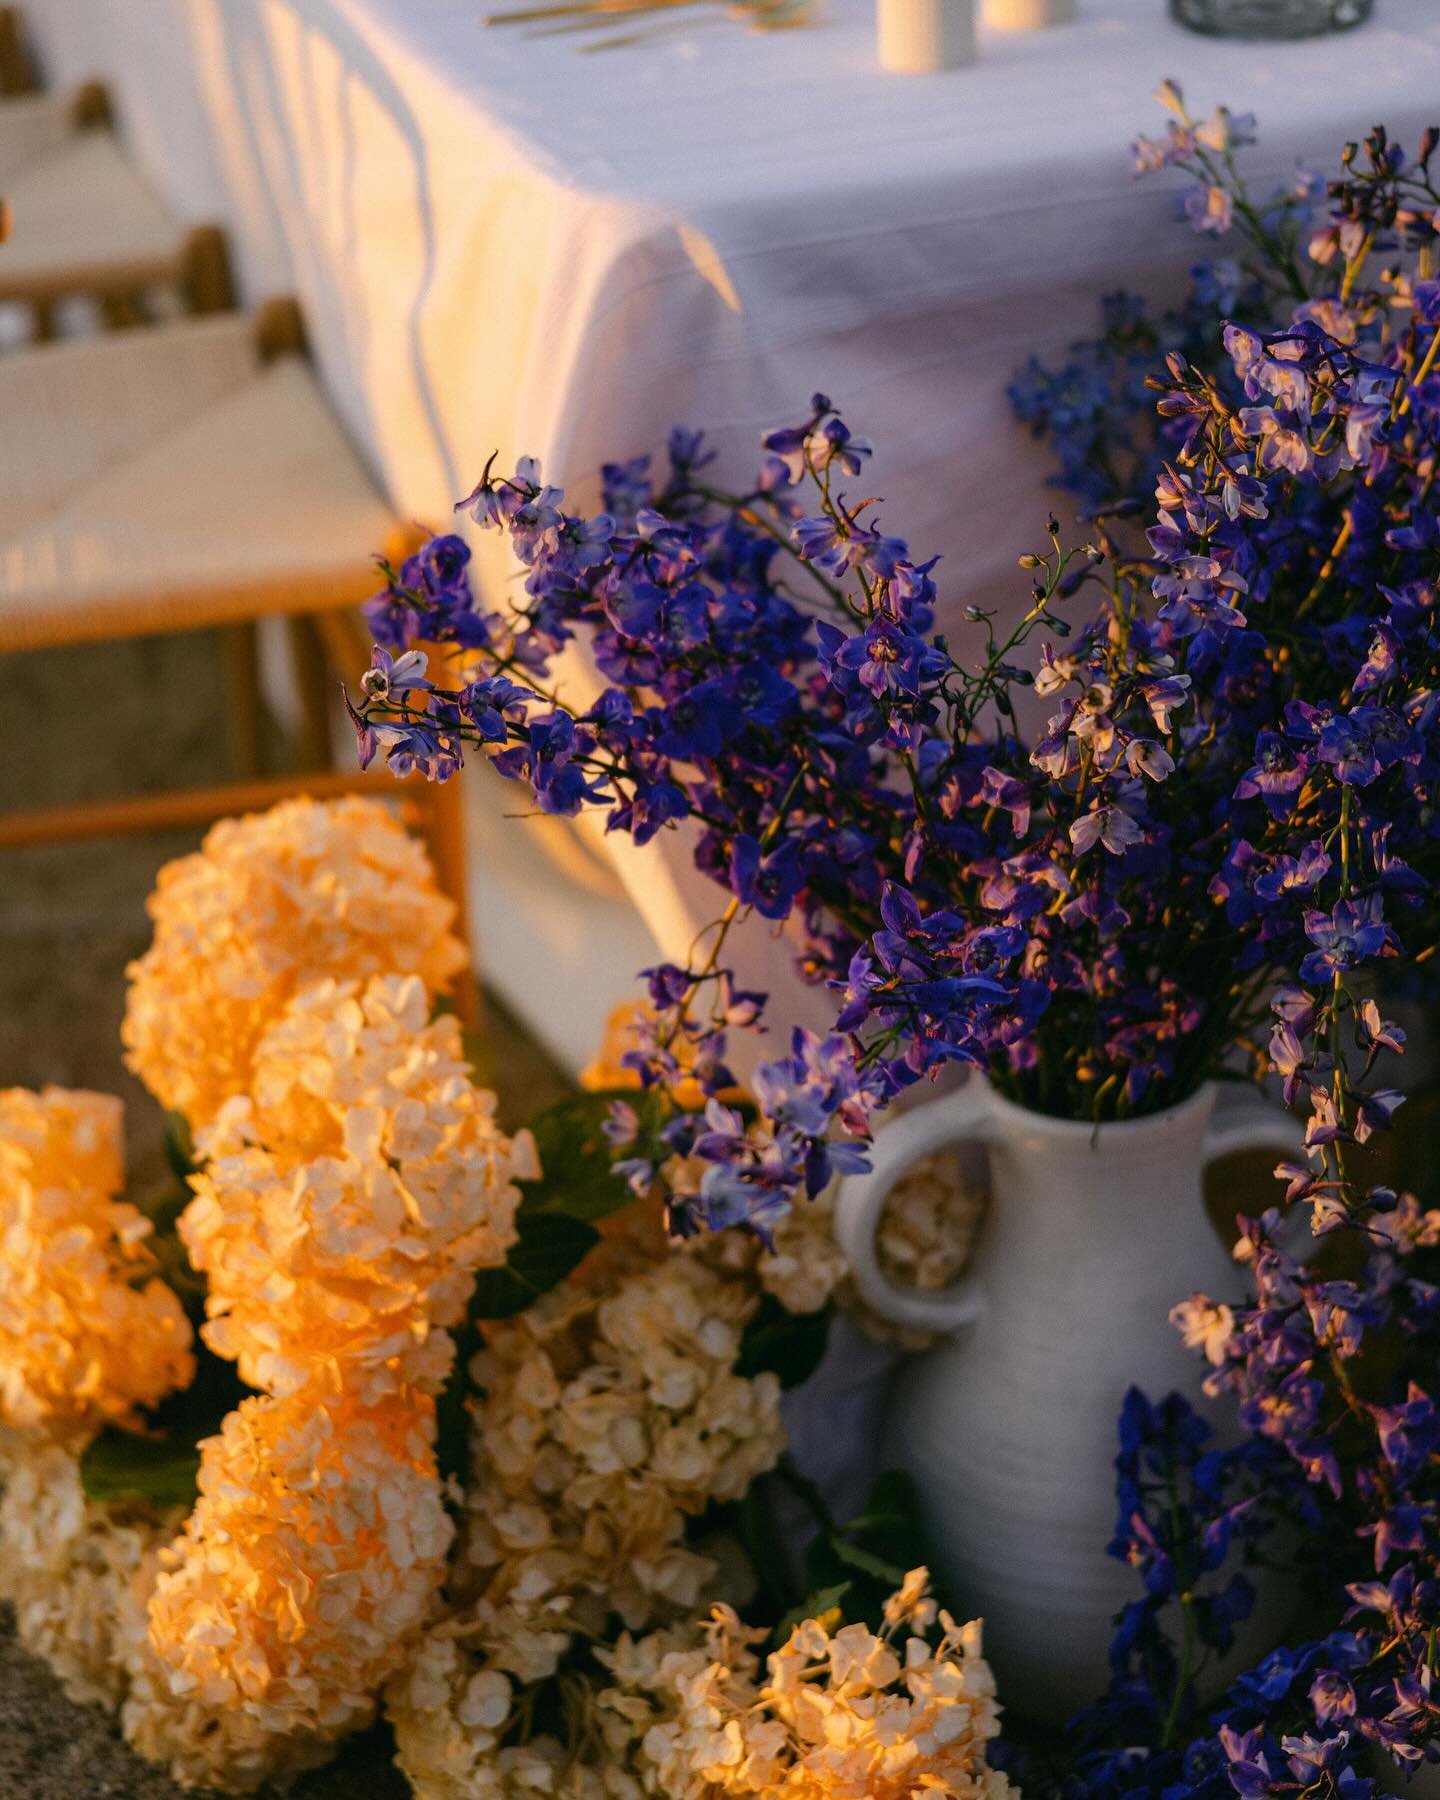 💙💙💙

Planning &amp; design: @adrnevents 
Photography: @takkephotography
Florals: @terracotta_florals
Tabletop: @catalogatelier
Videography: @tannercastrofilms
@sandduneproductionco
Venue: Private estate

#wedding #socalweddings #sandiegoweddings #